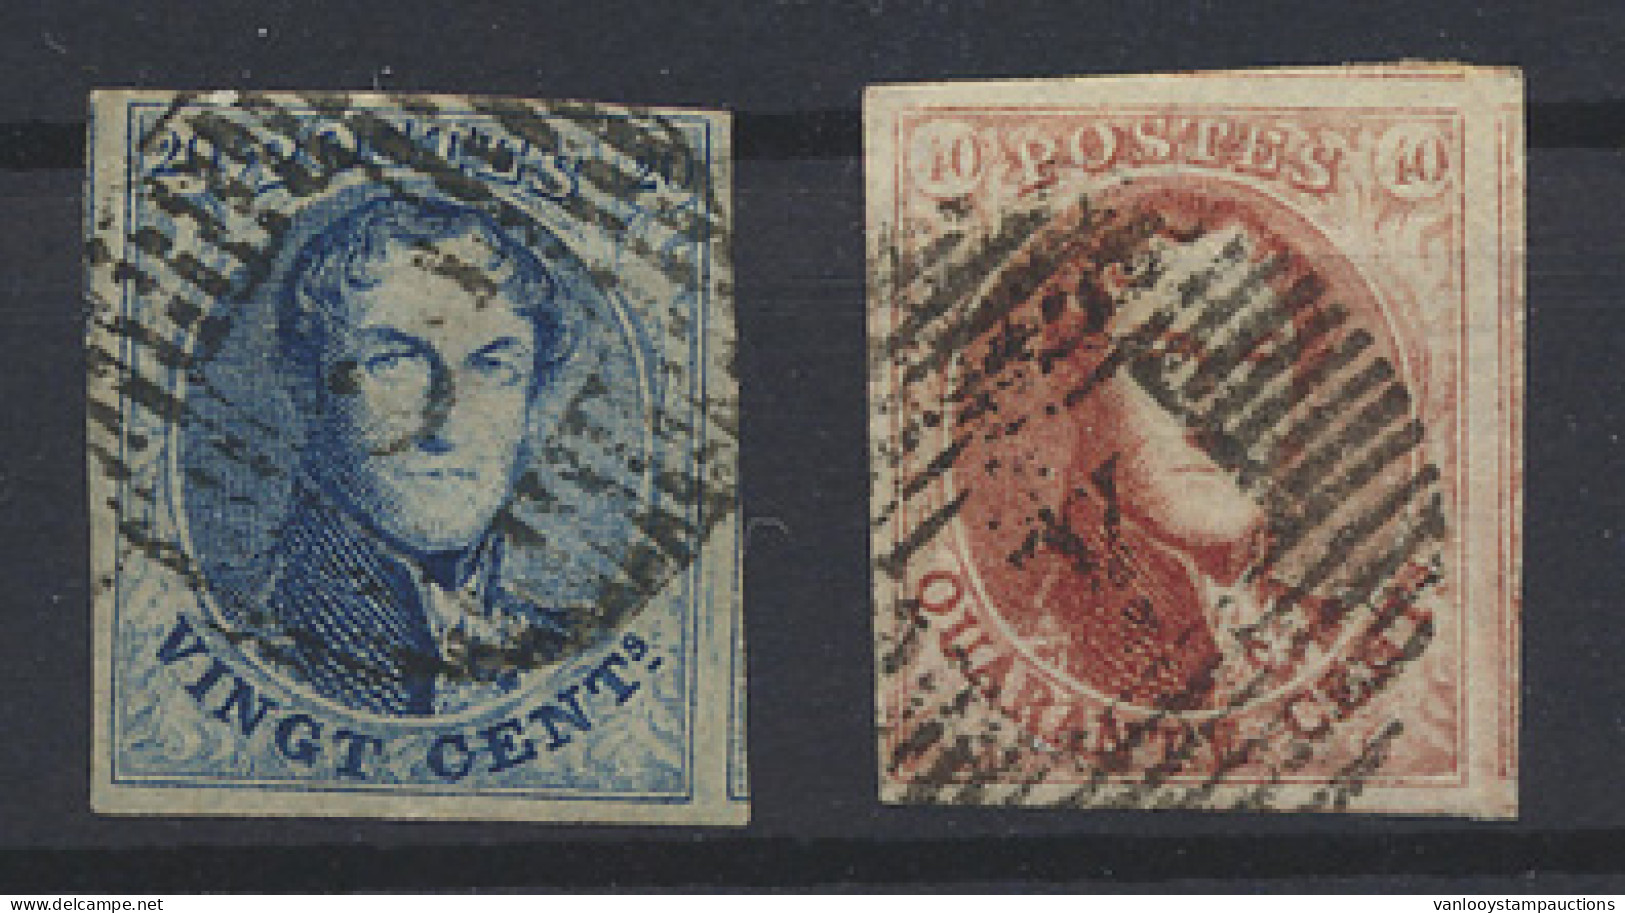 N° 11A + 12A 20c. Blauw + 40c. Vermiljoen, Beide Zeer Breed Gerand + 2 Geburen, Zm (OBP €142) - 1849-1865 Medallions (Other)